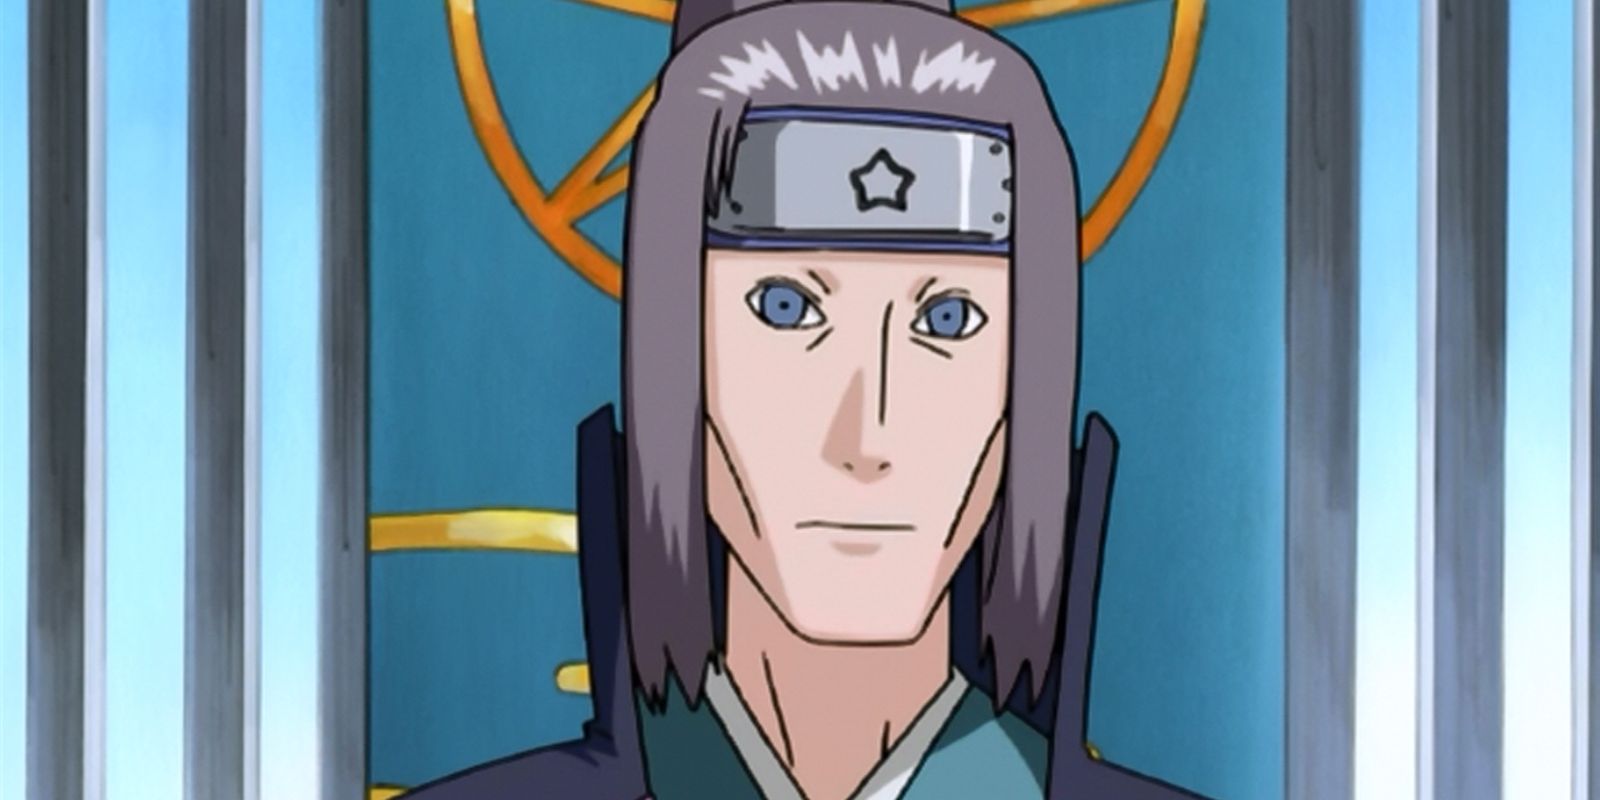 Akahoshi the Fourth Hoshikage stares ahead in Naruto